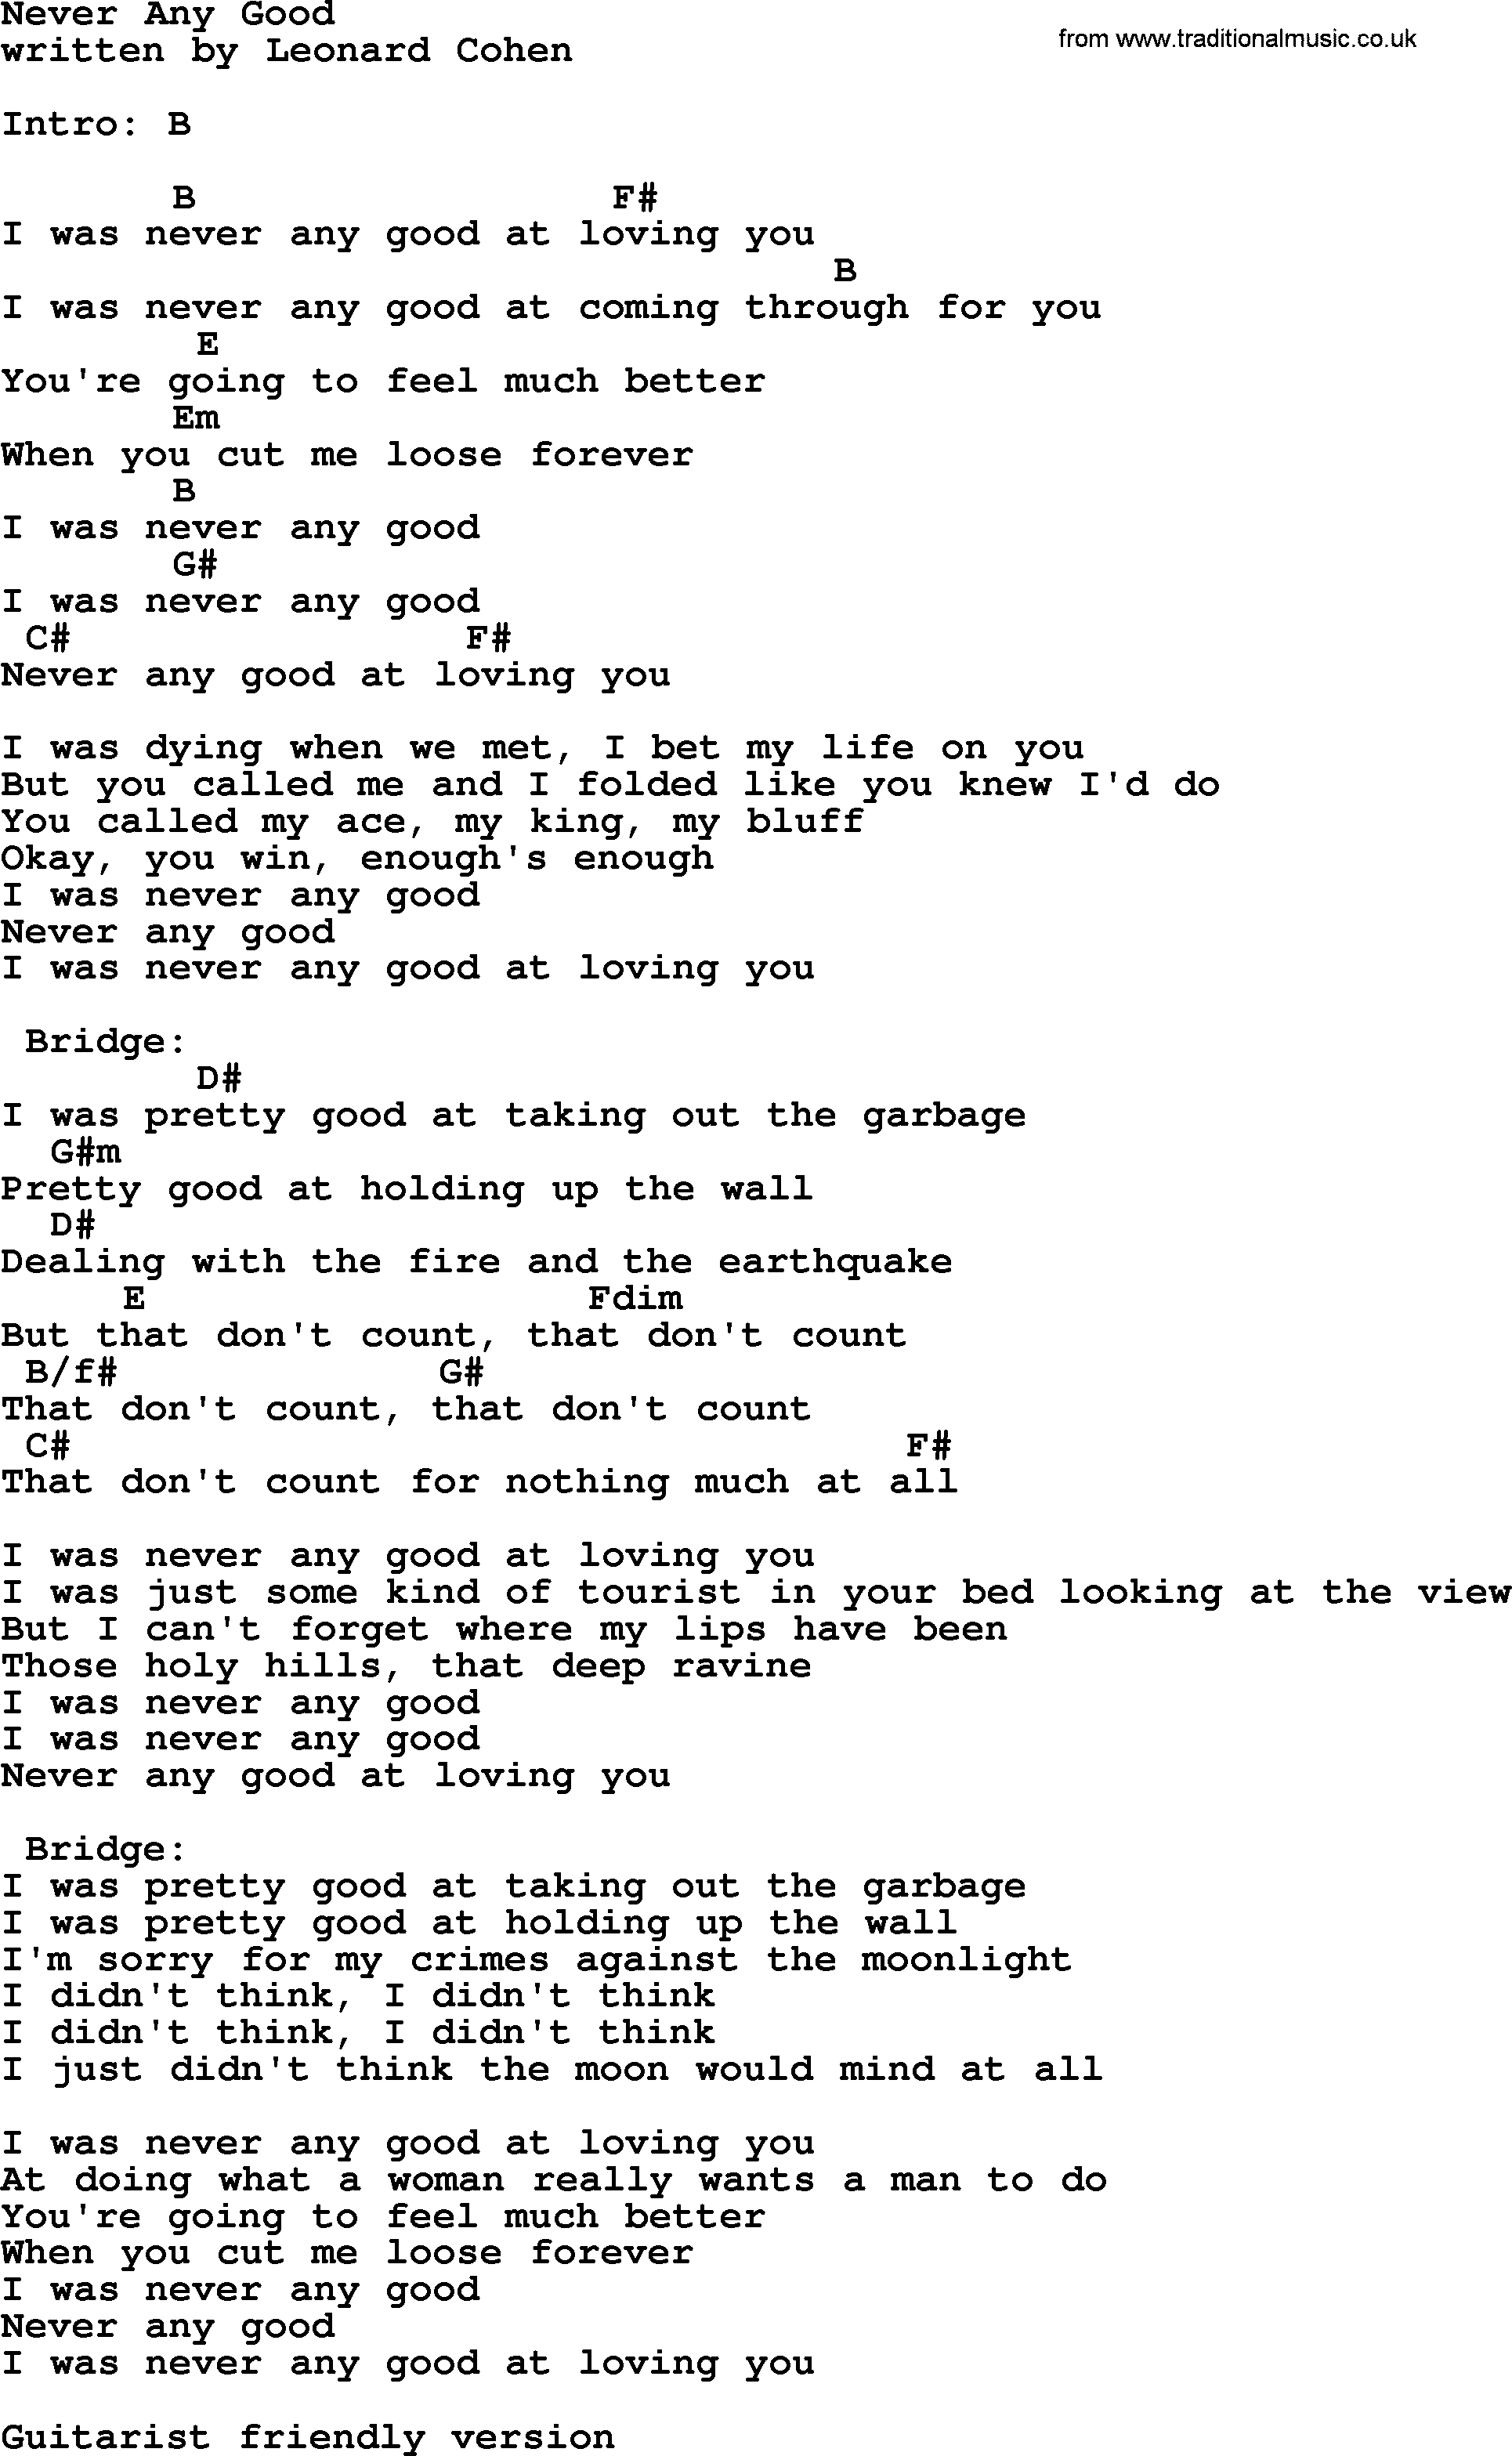 Leonard Cohen song Never Any Good, lyrics and chords